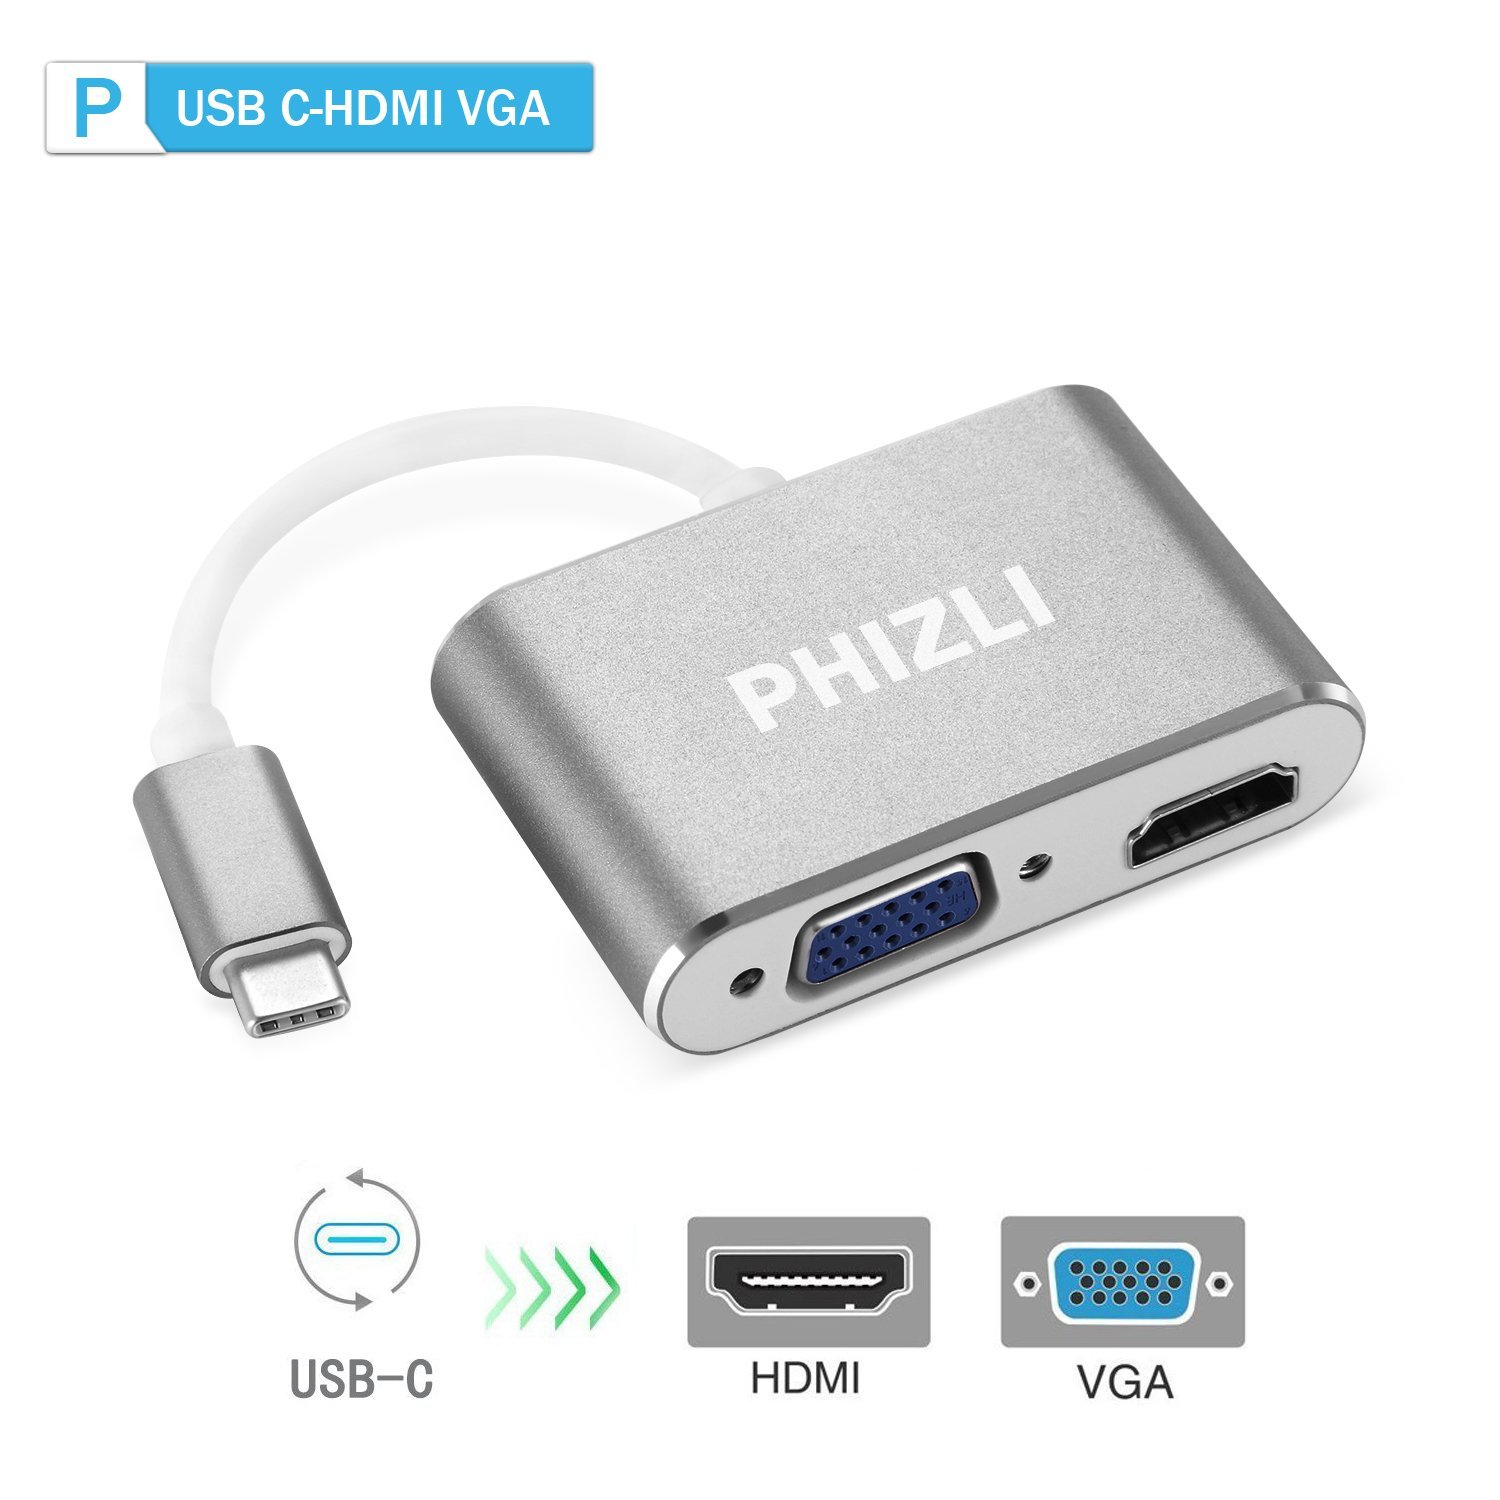 PHIZLI USB- C TO HDMI VGA ADAPTER 2 in 1 USB 3.1 TYPE C TO VGA HDMI 4K UHD CONVERTER ADAPTOR DUAL SCREEN DISPLAY WITH ALUMINIUM CASE FOR 2017/2016 MACBOOK/CHROMEBOOK PIXELI